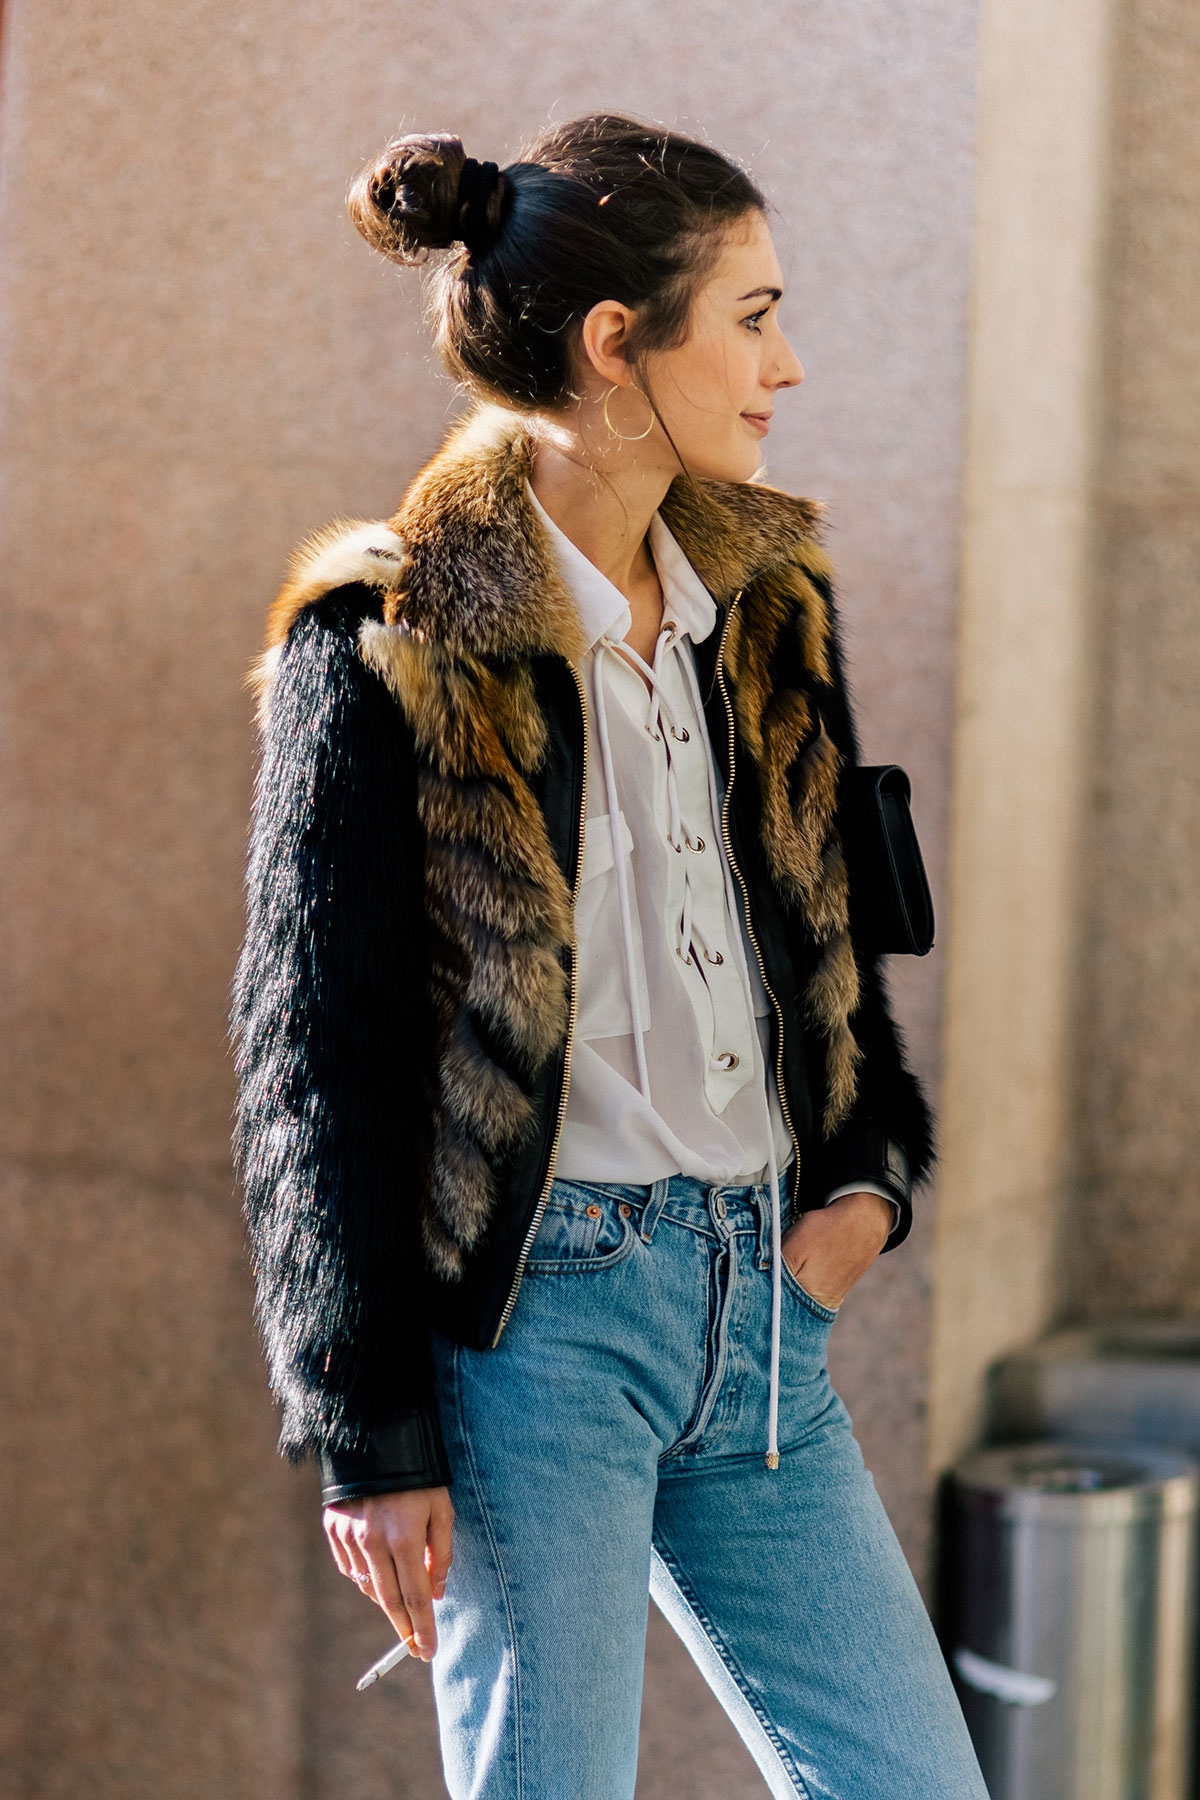 Diletta Bonaiuti wearing a Roberto Cavalli fur jacket and Levis jeans after the Fendi Fall/Winter 2015-2016 fashion show in Milan, Italy